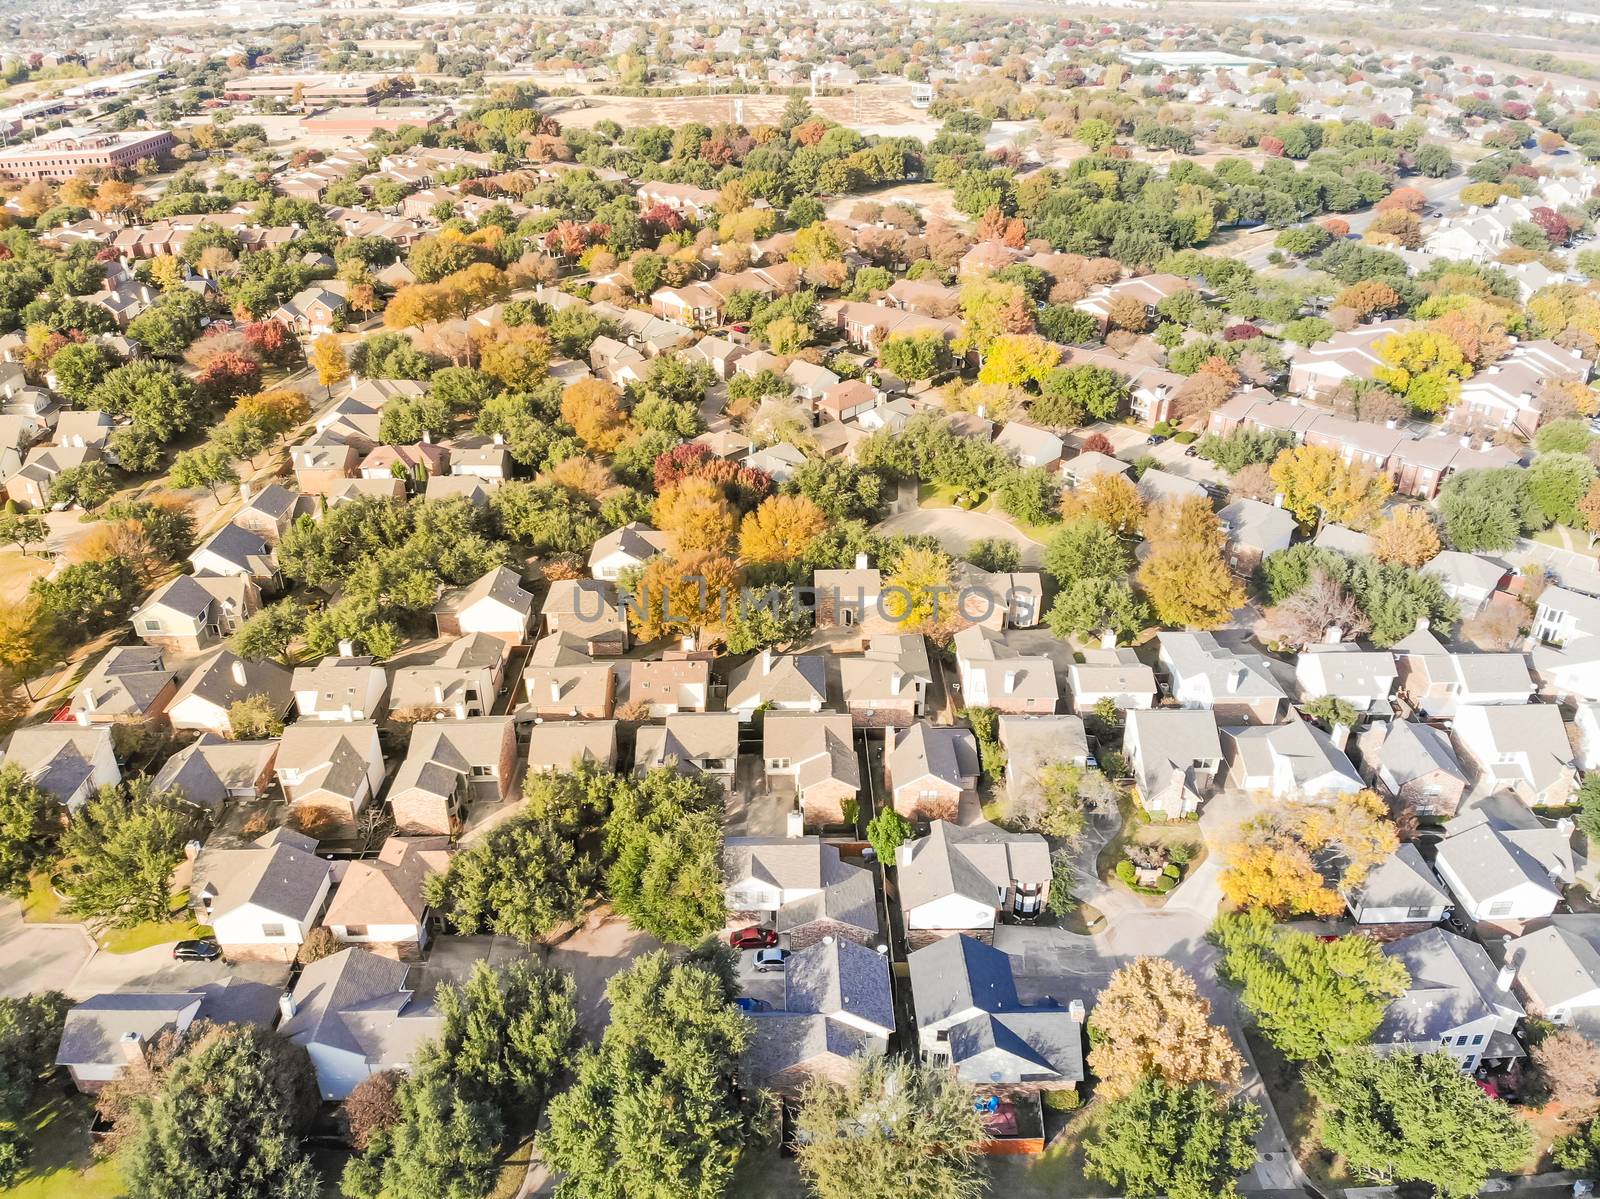 Top view urban sprawl suburbs Dallas during autumn season with c by trongnguyen